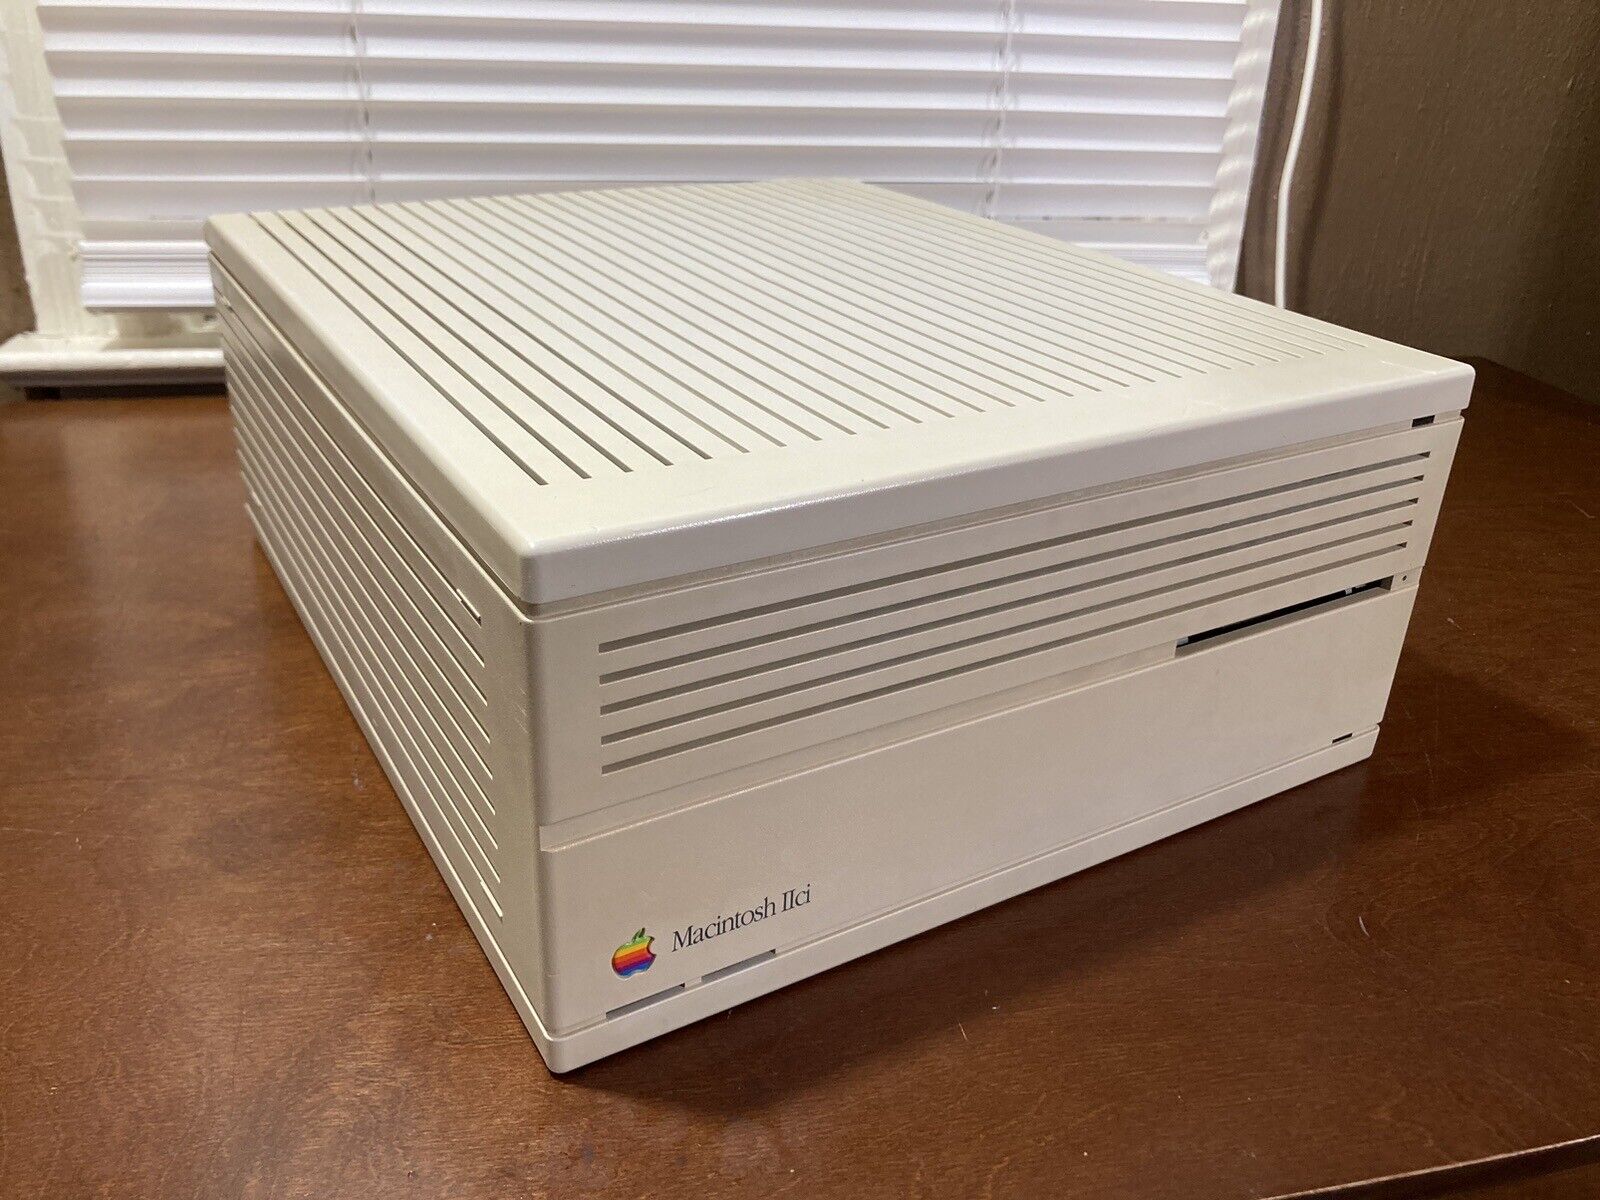 RECAPPED MACINTOSH IIci M5780 Vintage Apple Mac Computer Restored Working